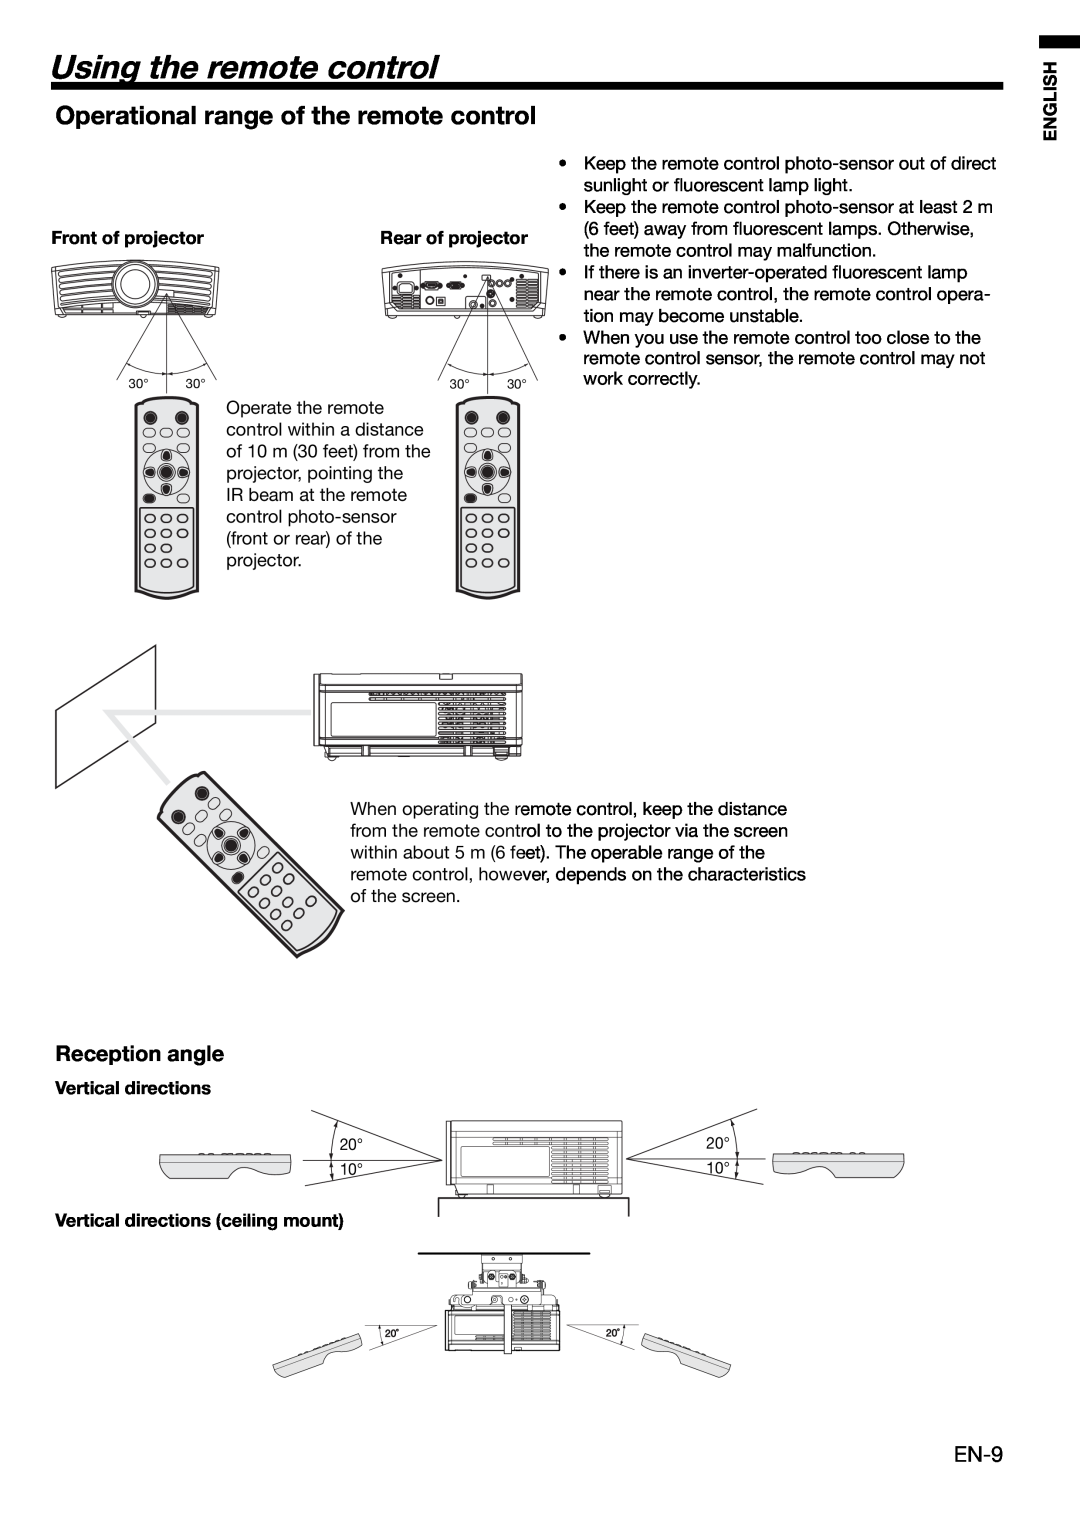 Mitsubishi HC1100 user manual Using the remote control, Operational range of the remote control, Reception angle, English 